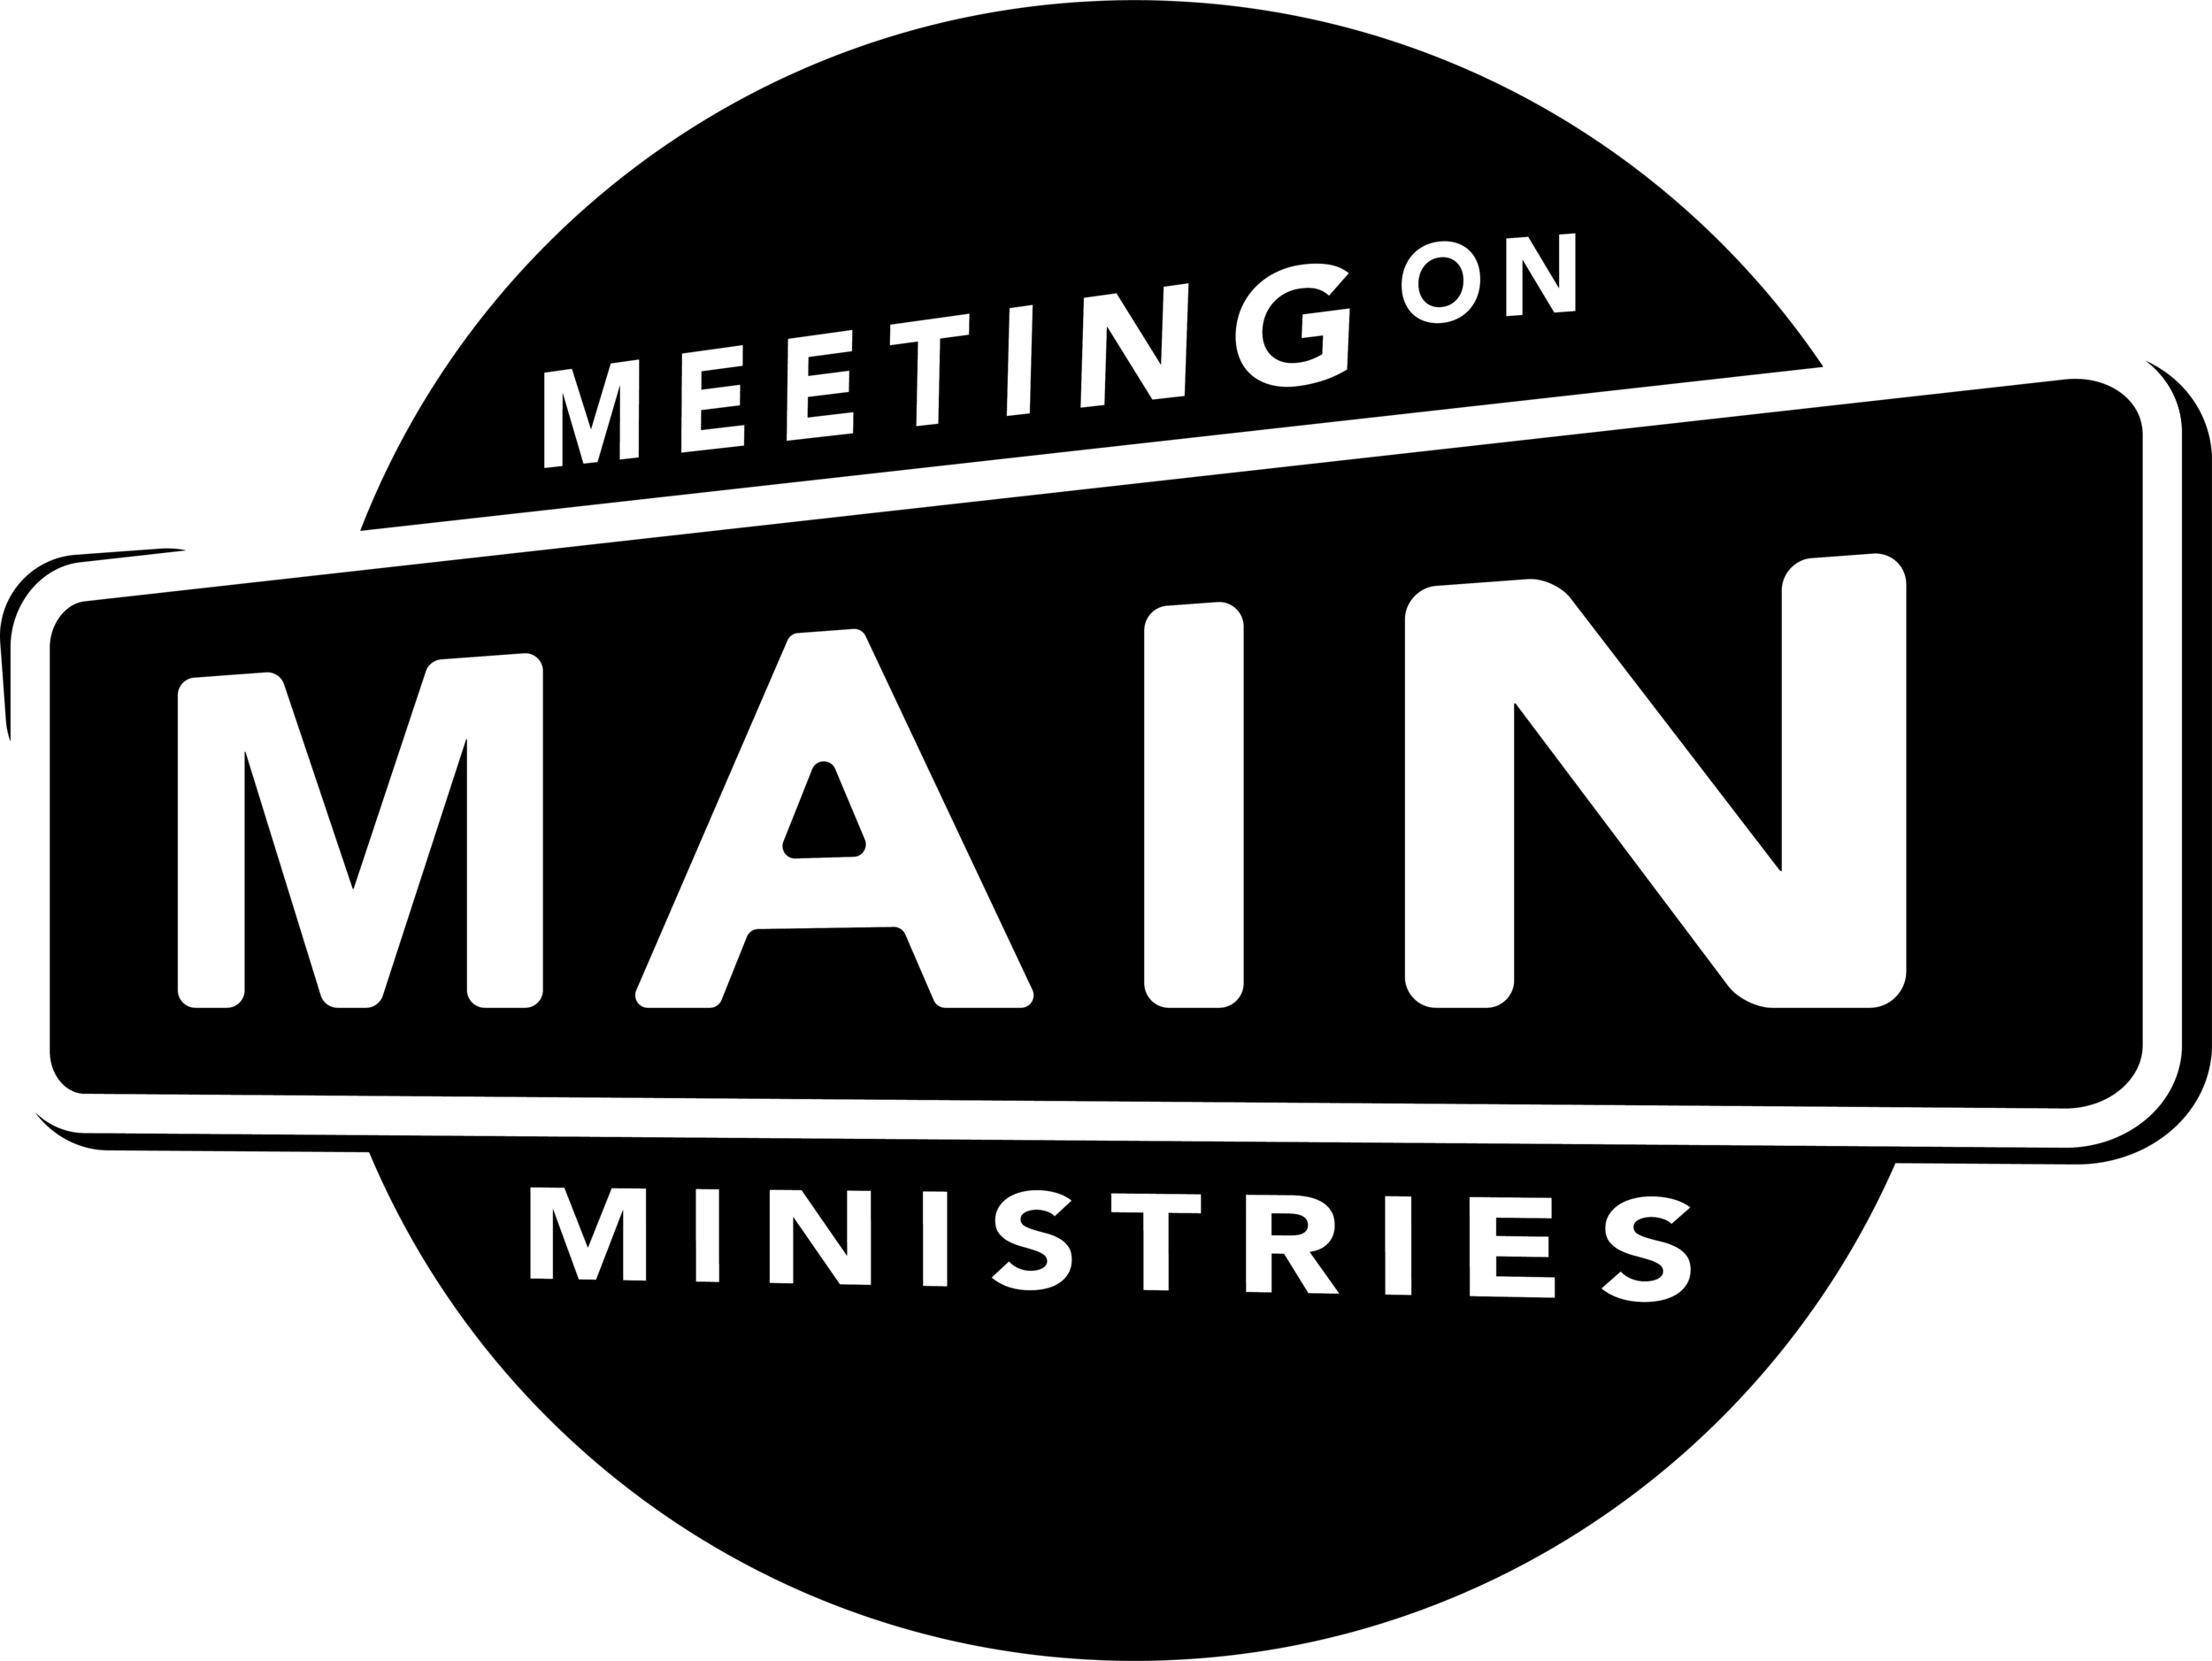 MEETING MAIN MINISTRIES